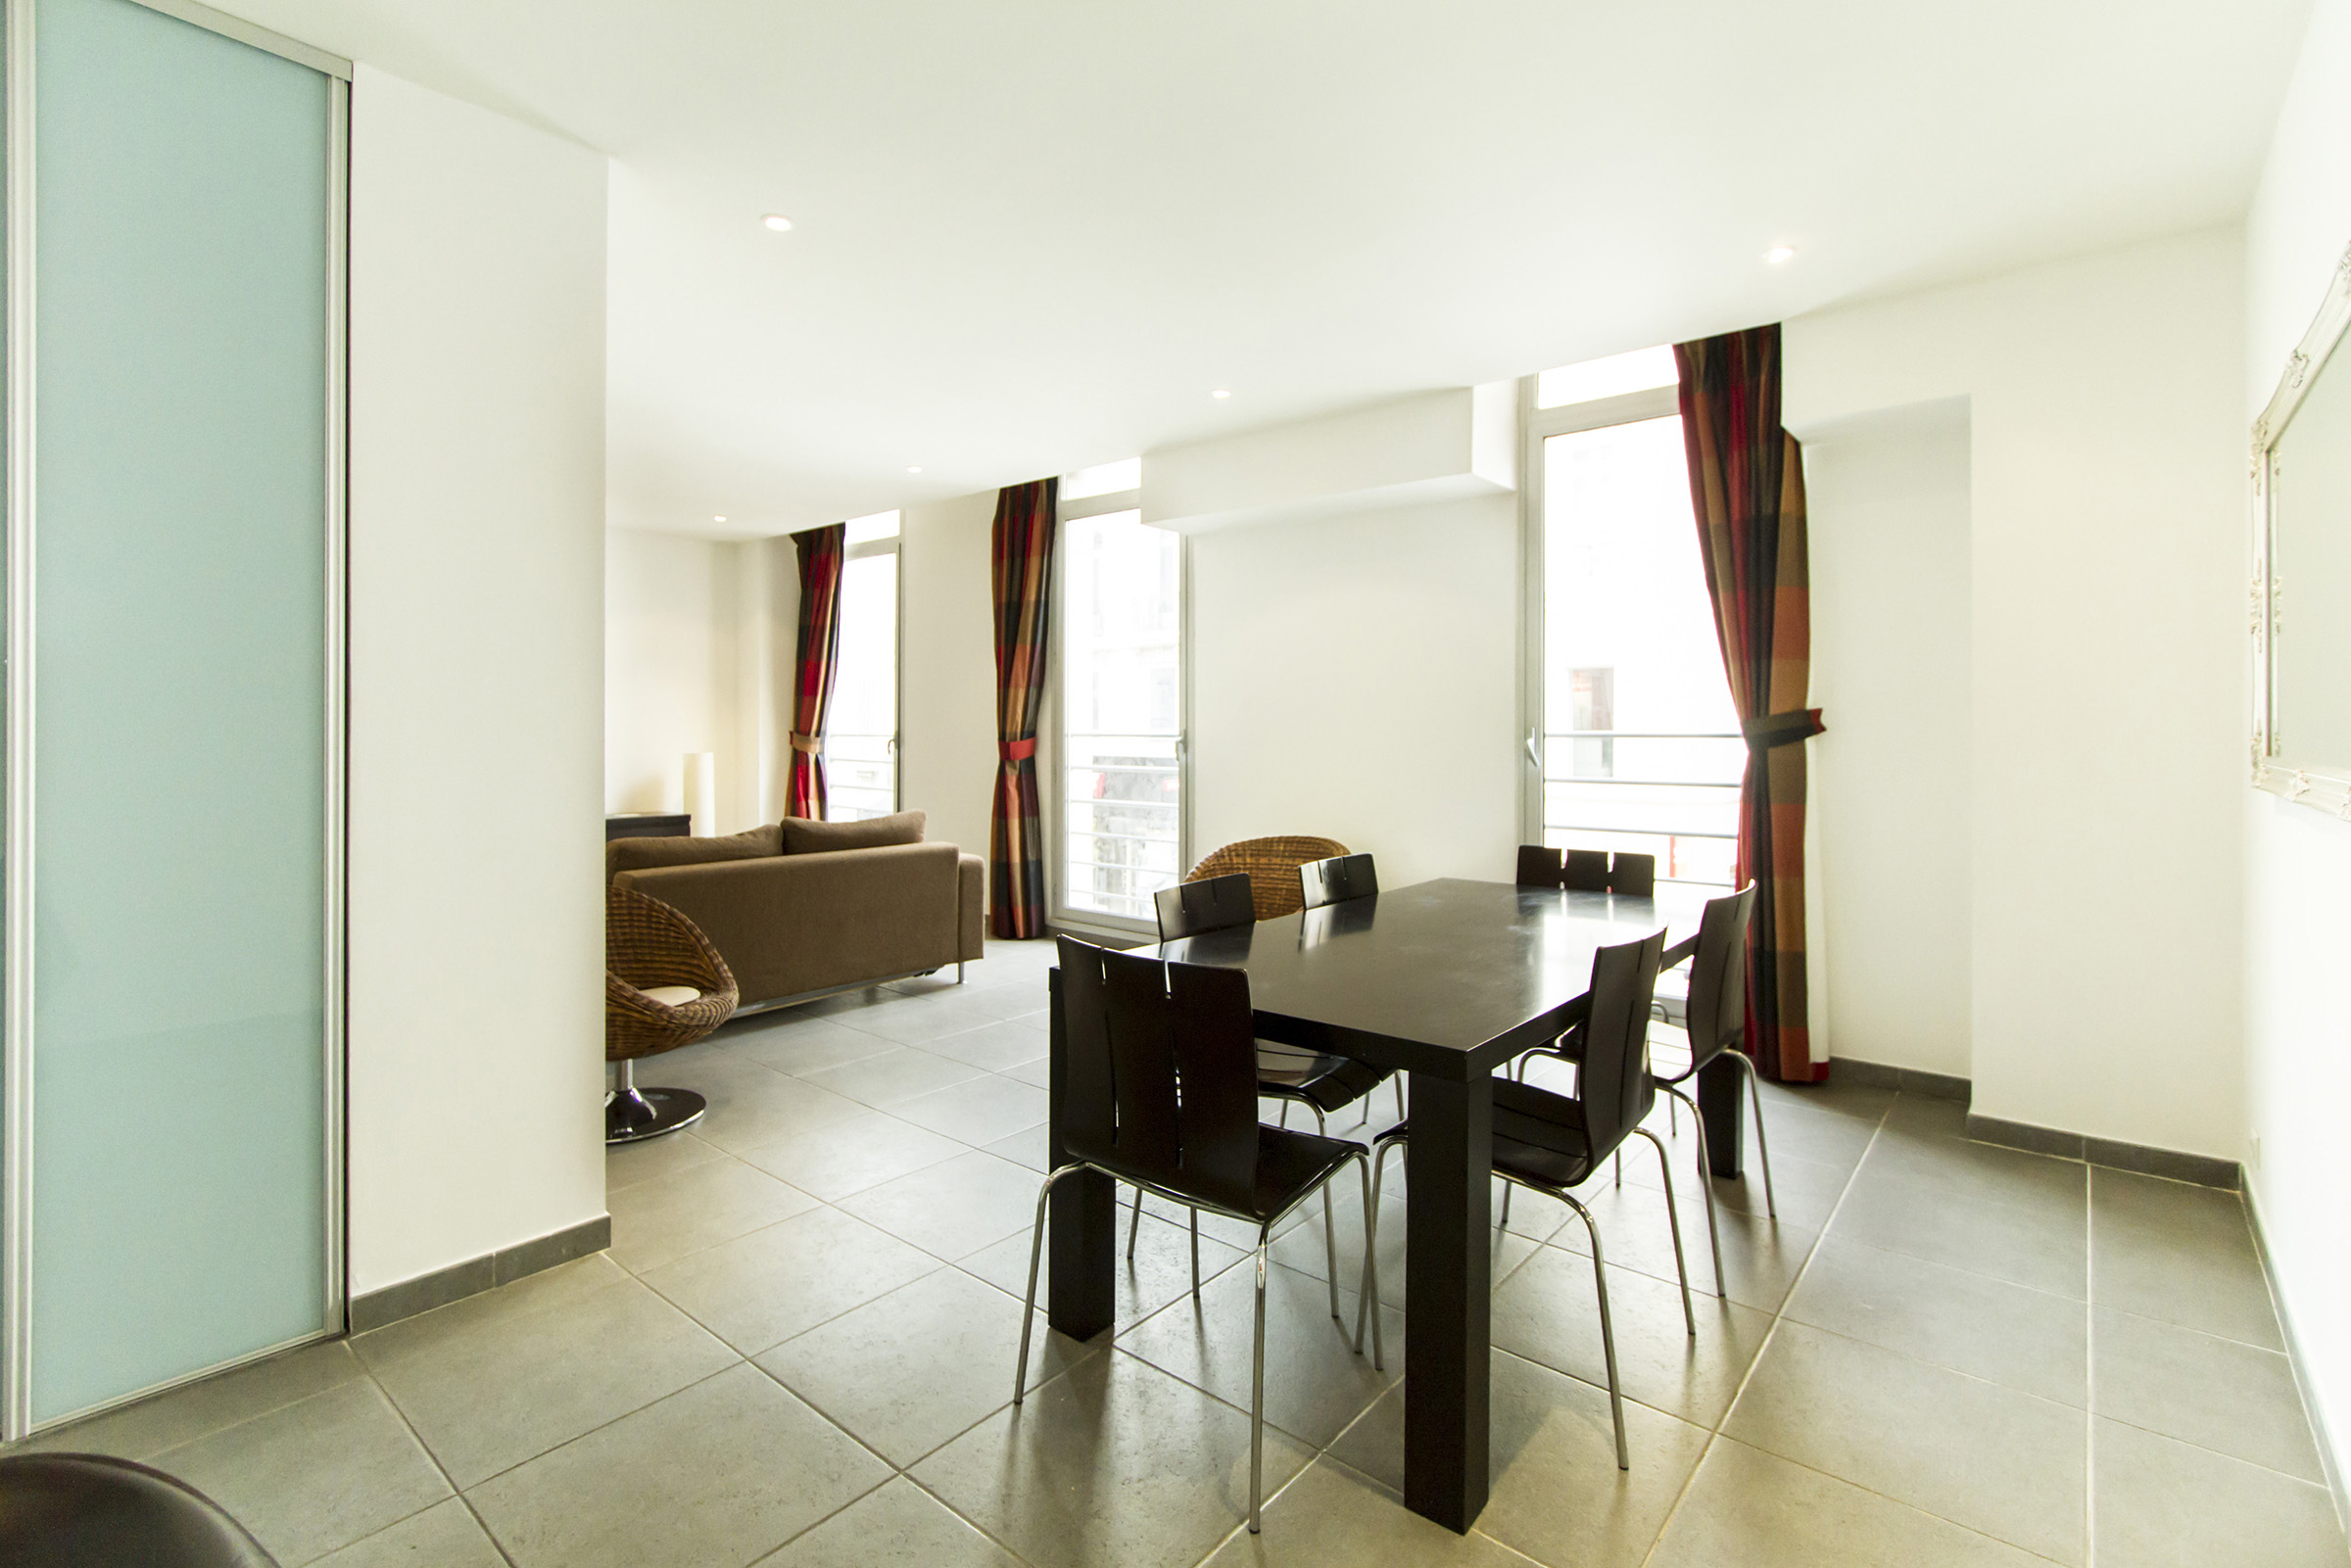 Appartement 2 pièces 68 m² - 1 bedroom apartment 68 sqmCroisette-grand--9-.jpg